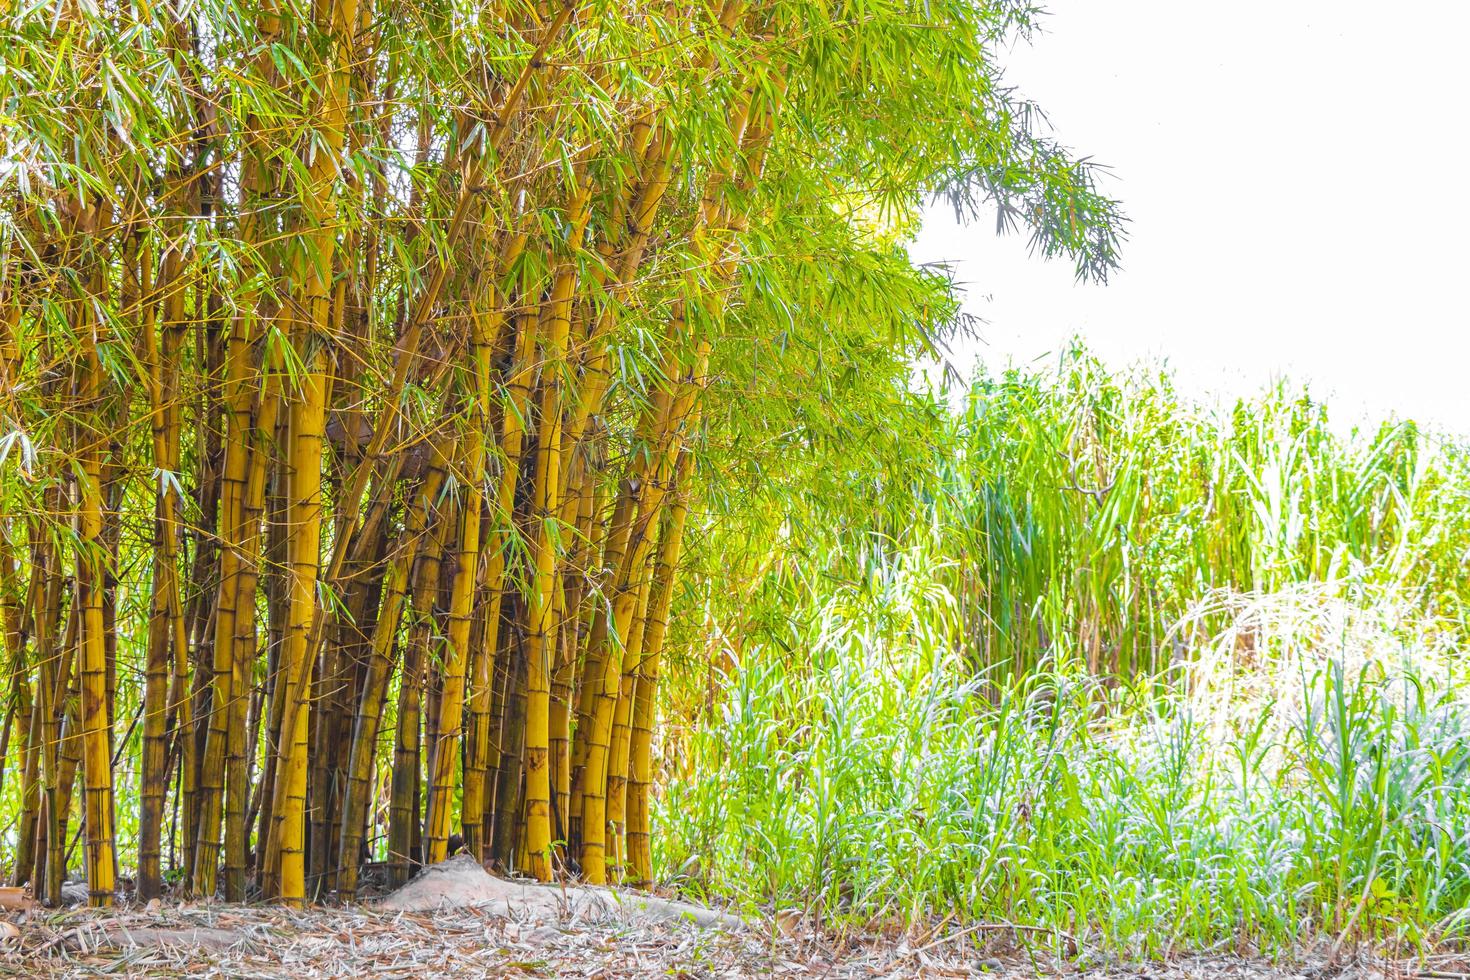 arbres de bambou vert jaune forêt tropicale san jose costa rica. photo